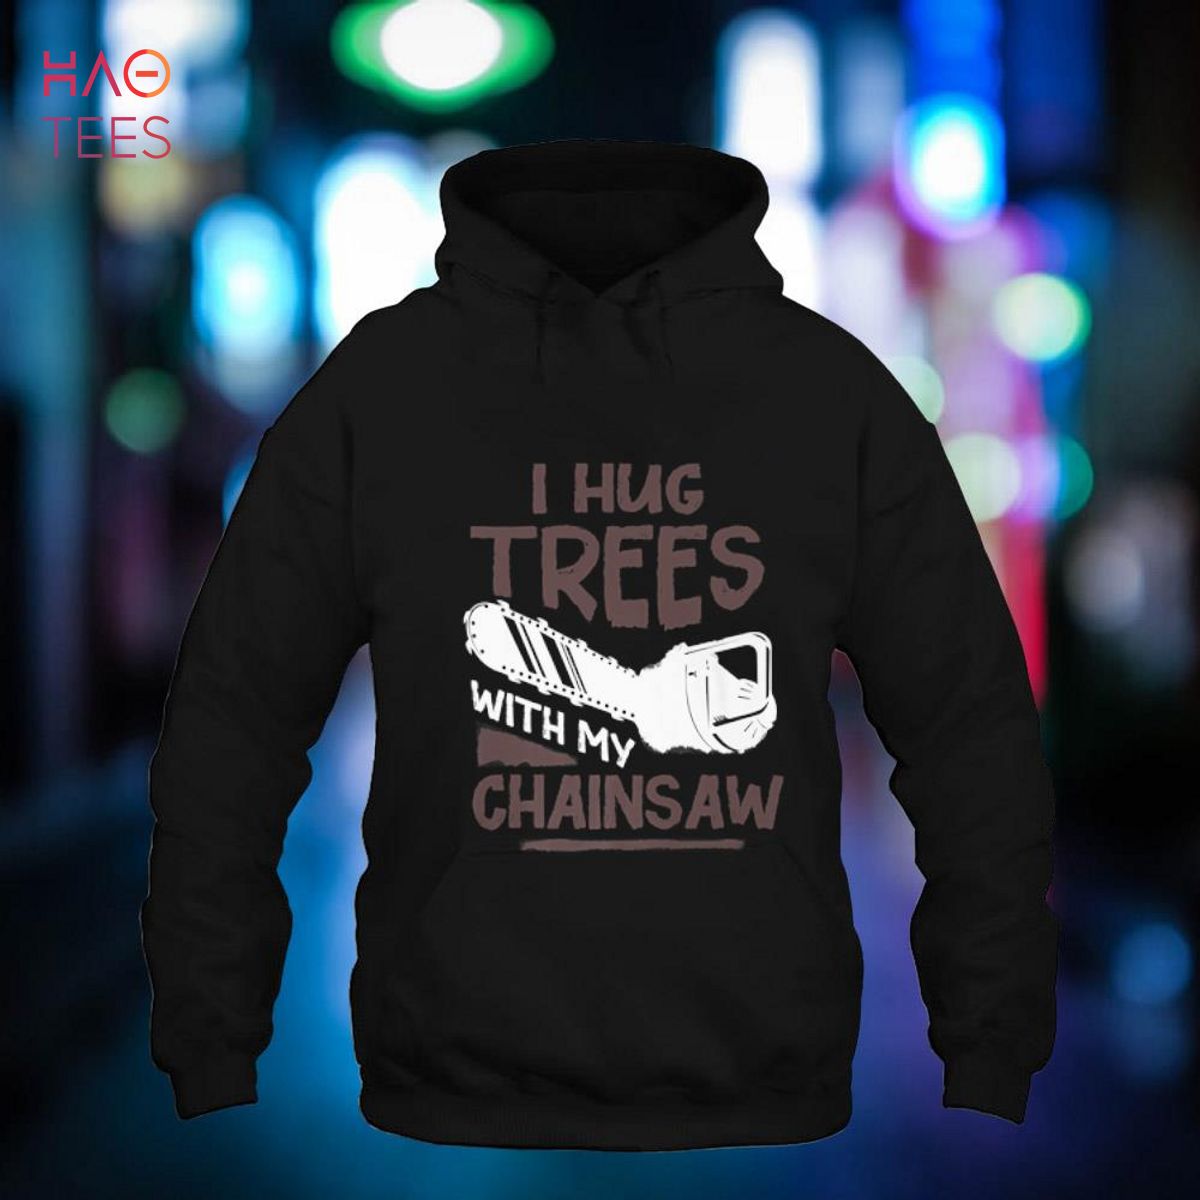 Arborist Hug Tree Surgeon Arboriculturist Shirt